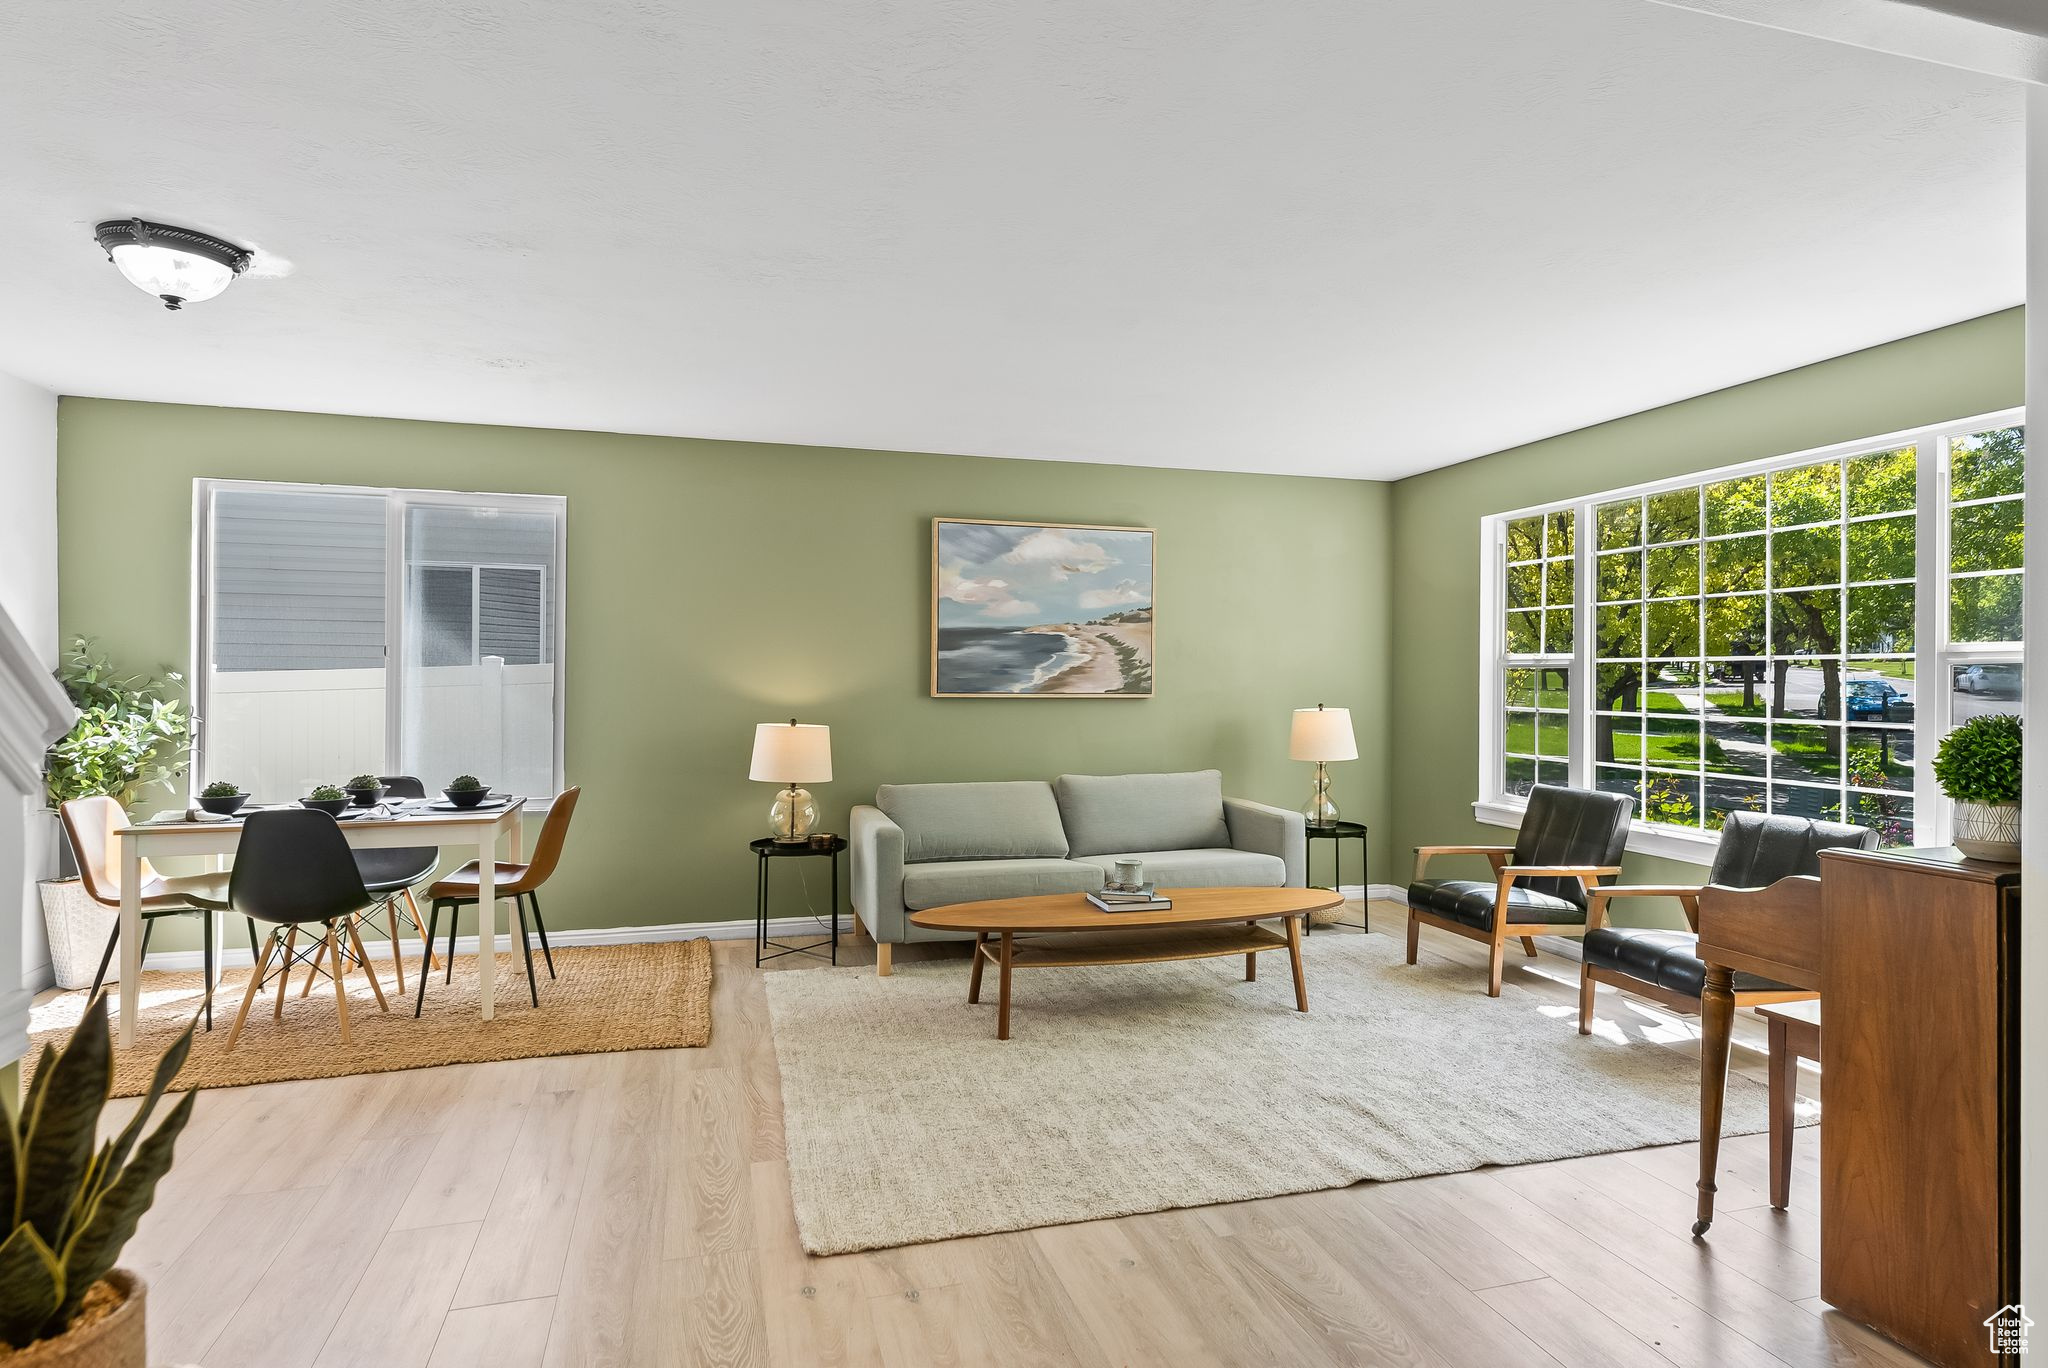 Living room featuring light hardwood / wood-style floors and plenty of natural light